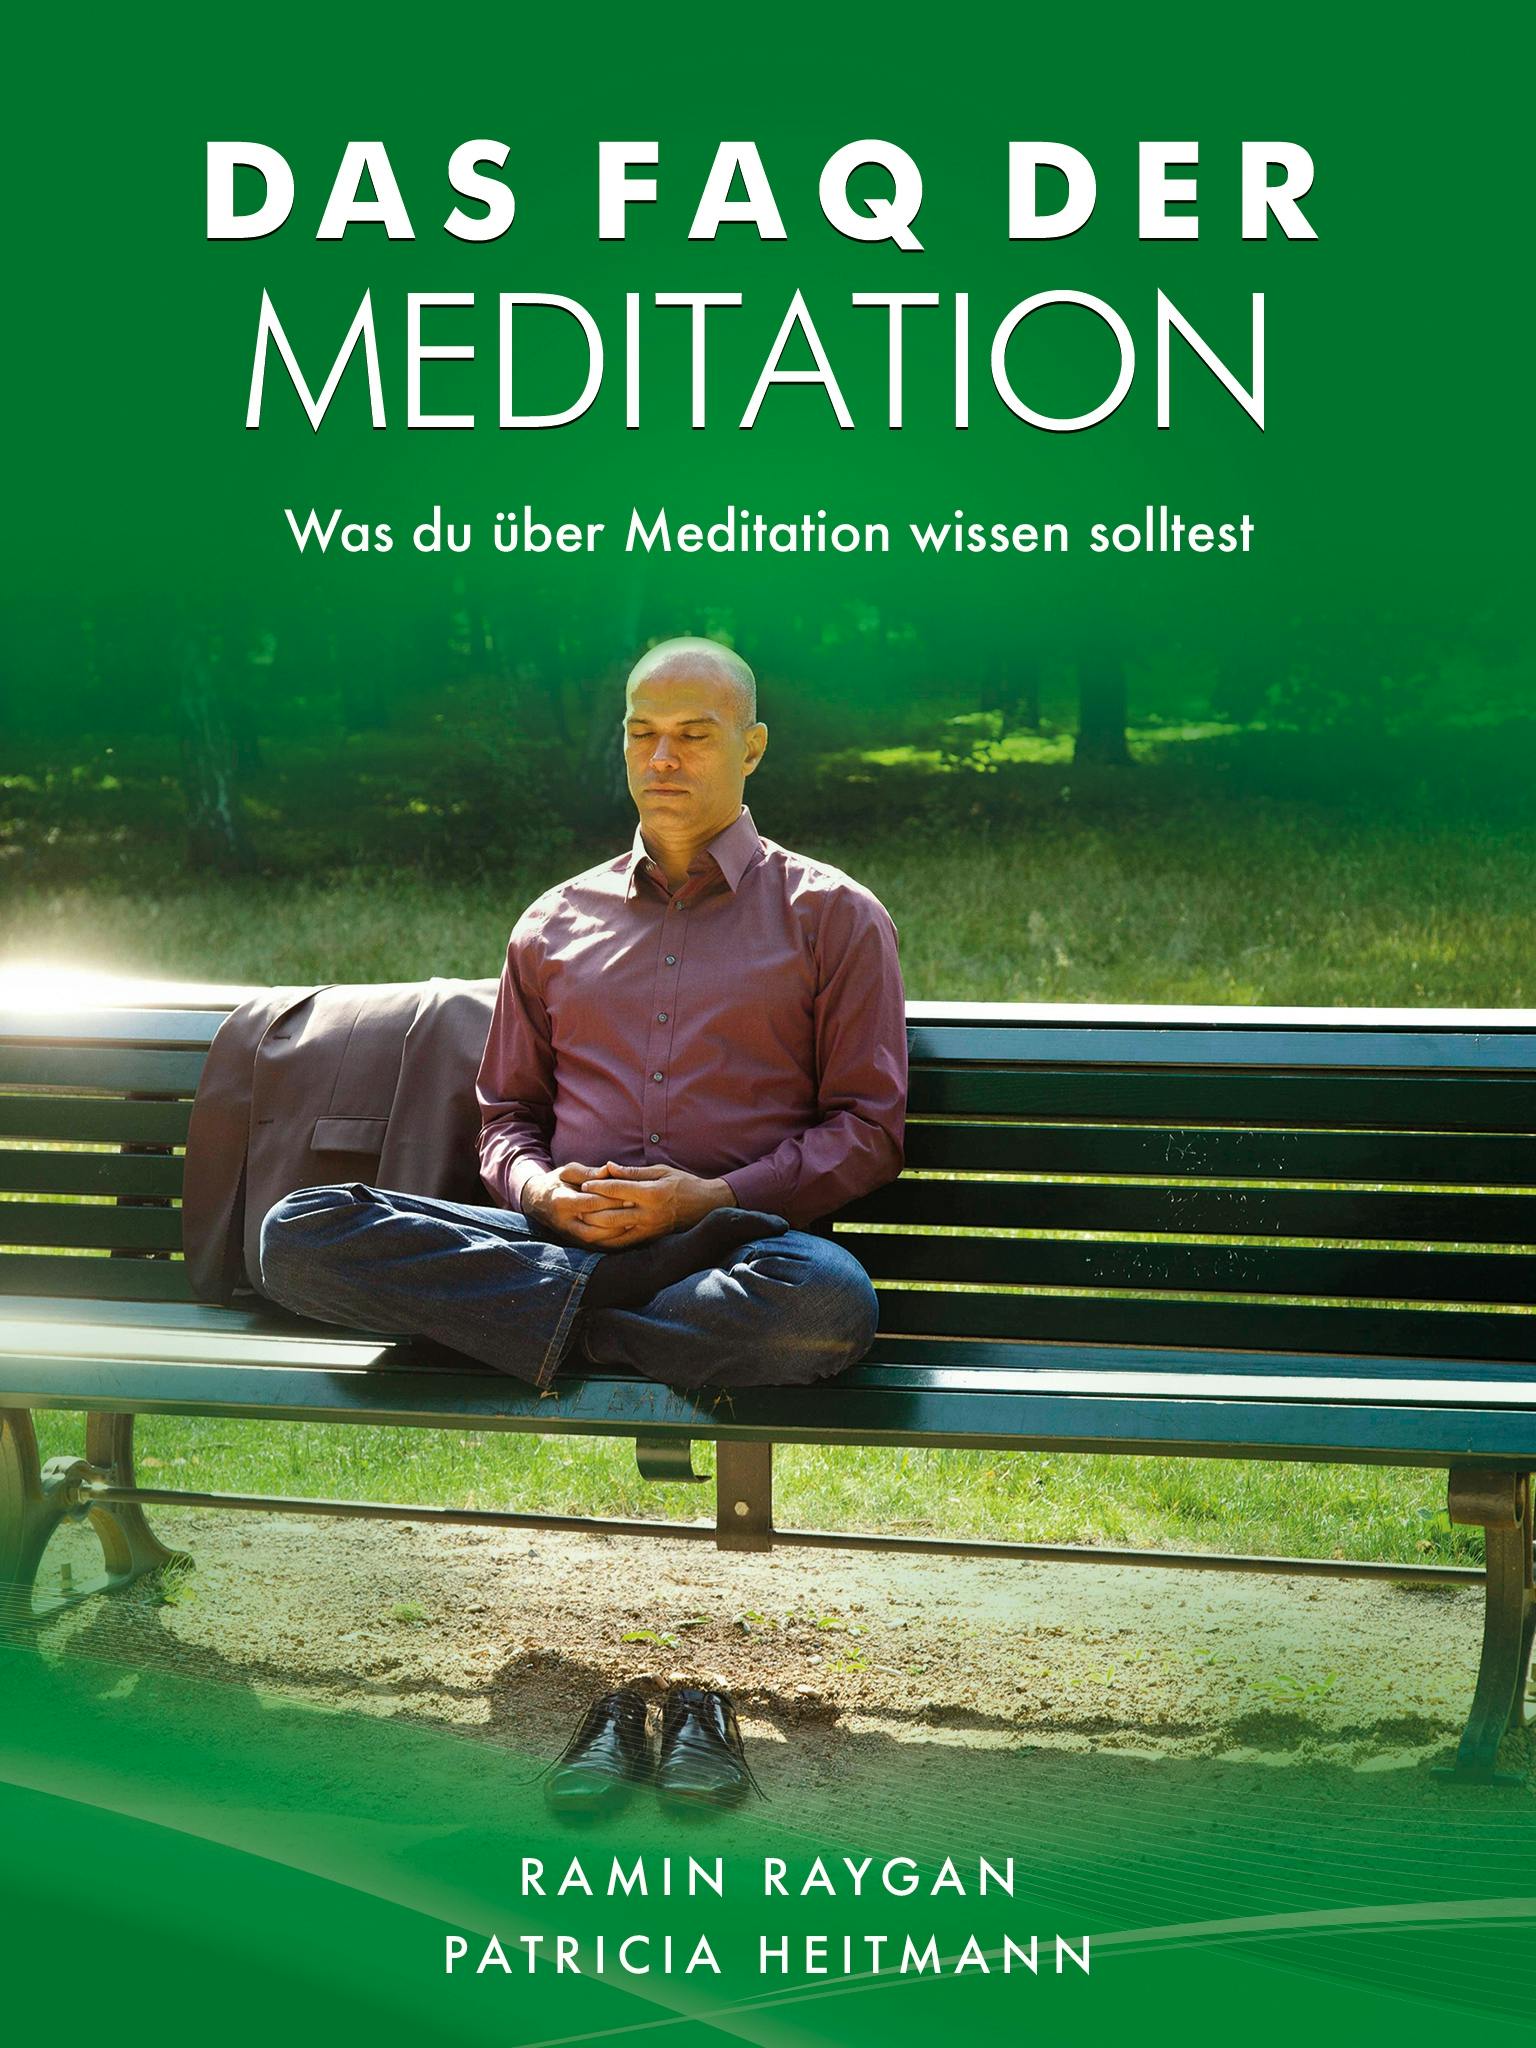 Das FAQ der Meditation - Ramin Raygan, Patricia Heitmann